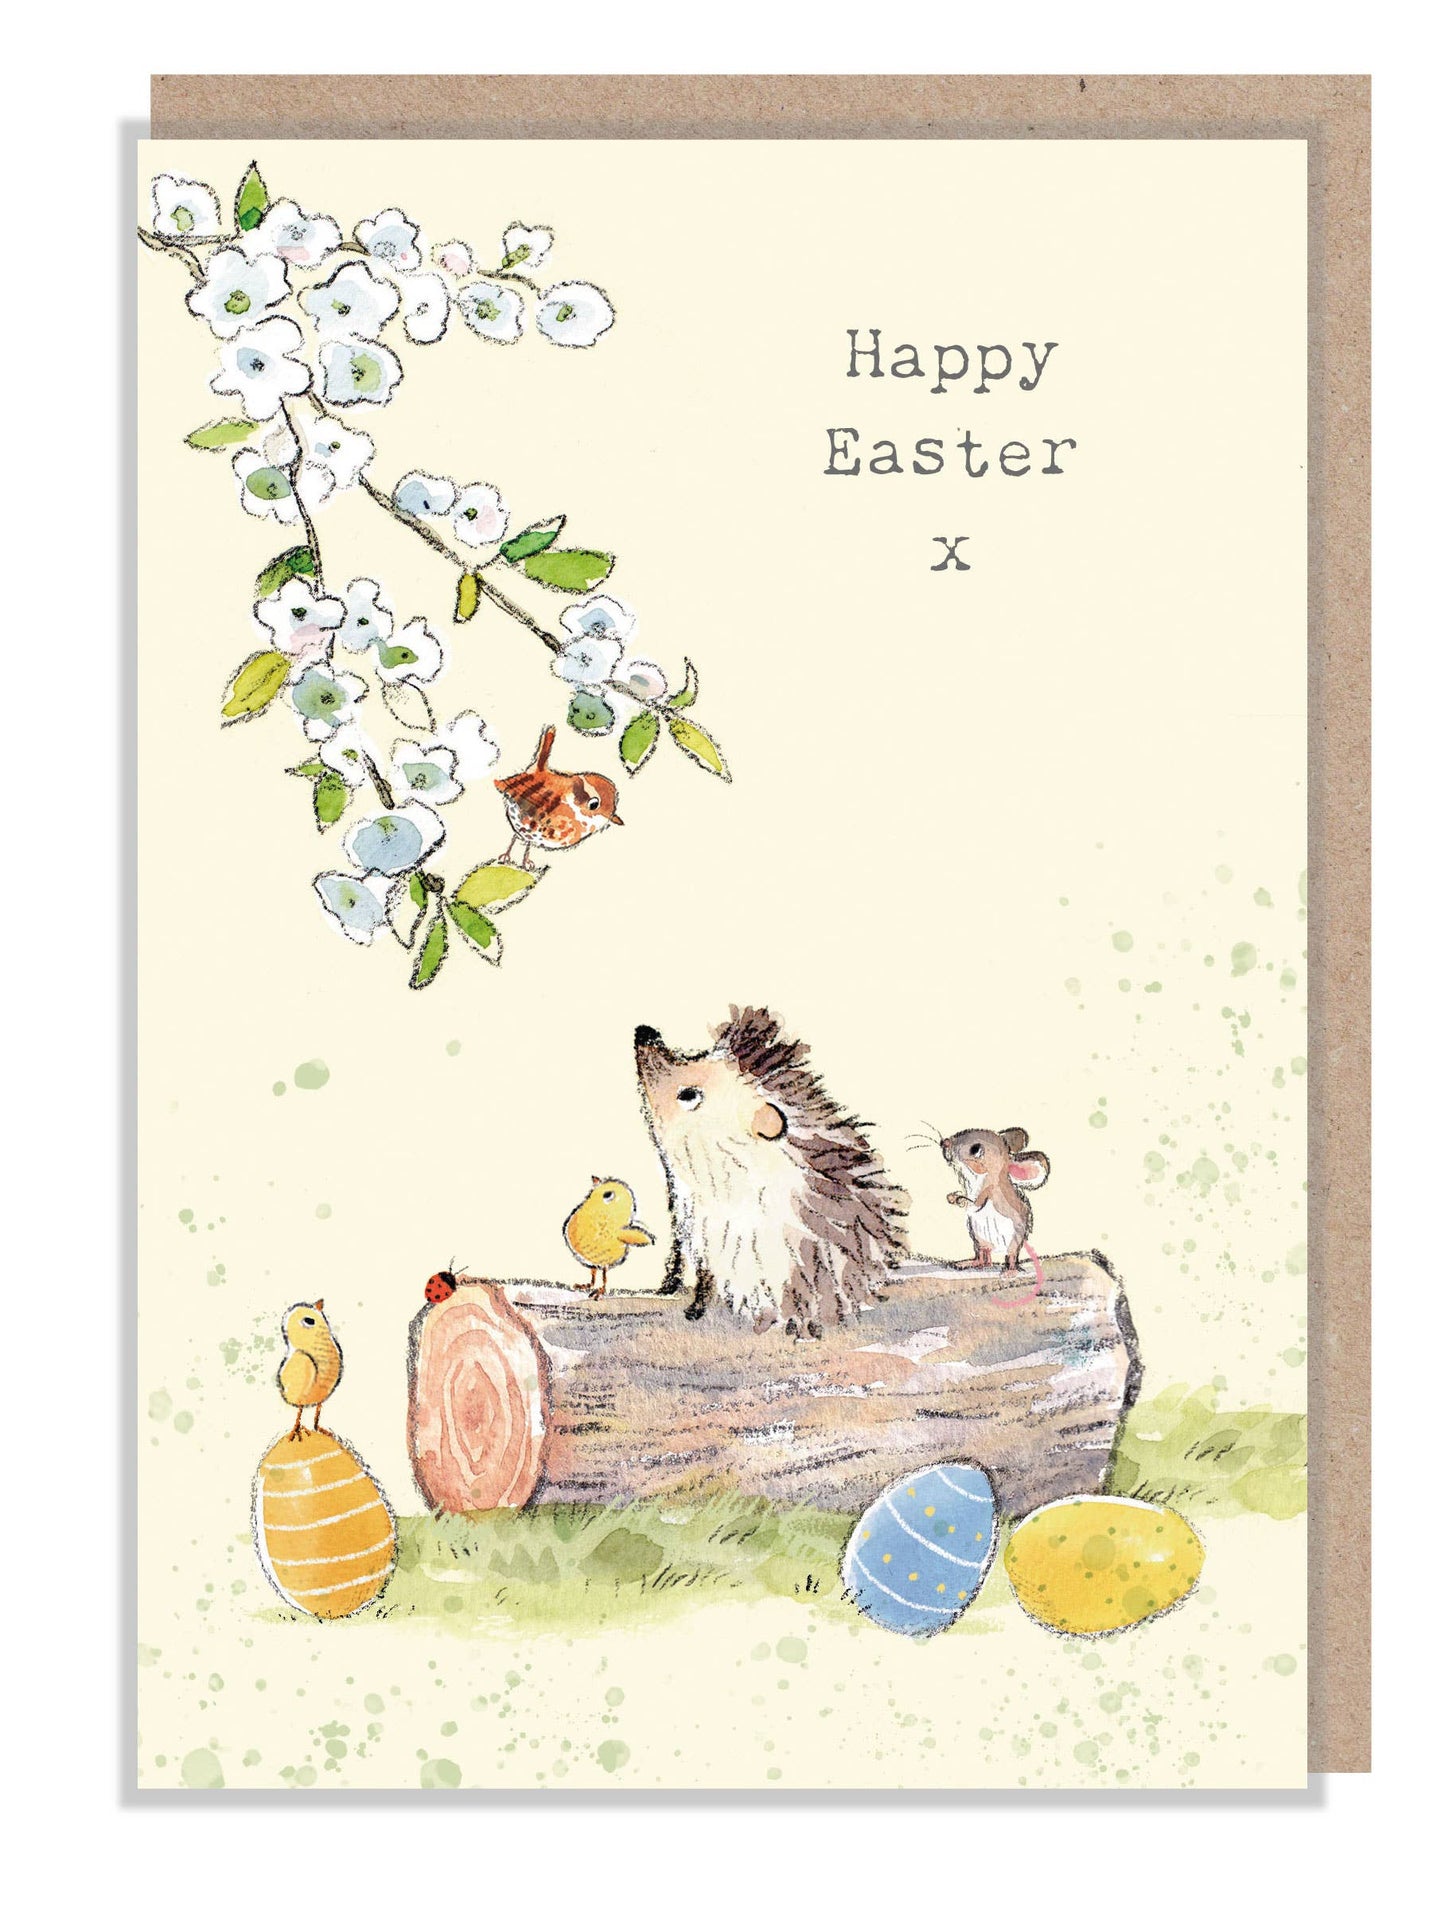 Paper Shed Design Ltd - Happy Easter Card - Hedgehog Mouse Bird Chicks And Eggs